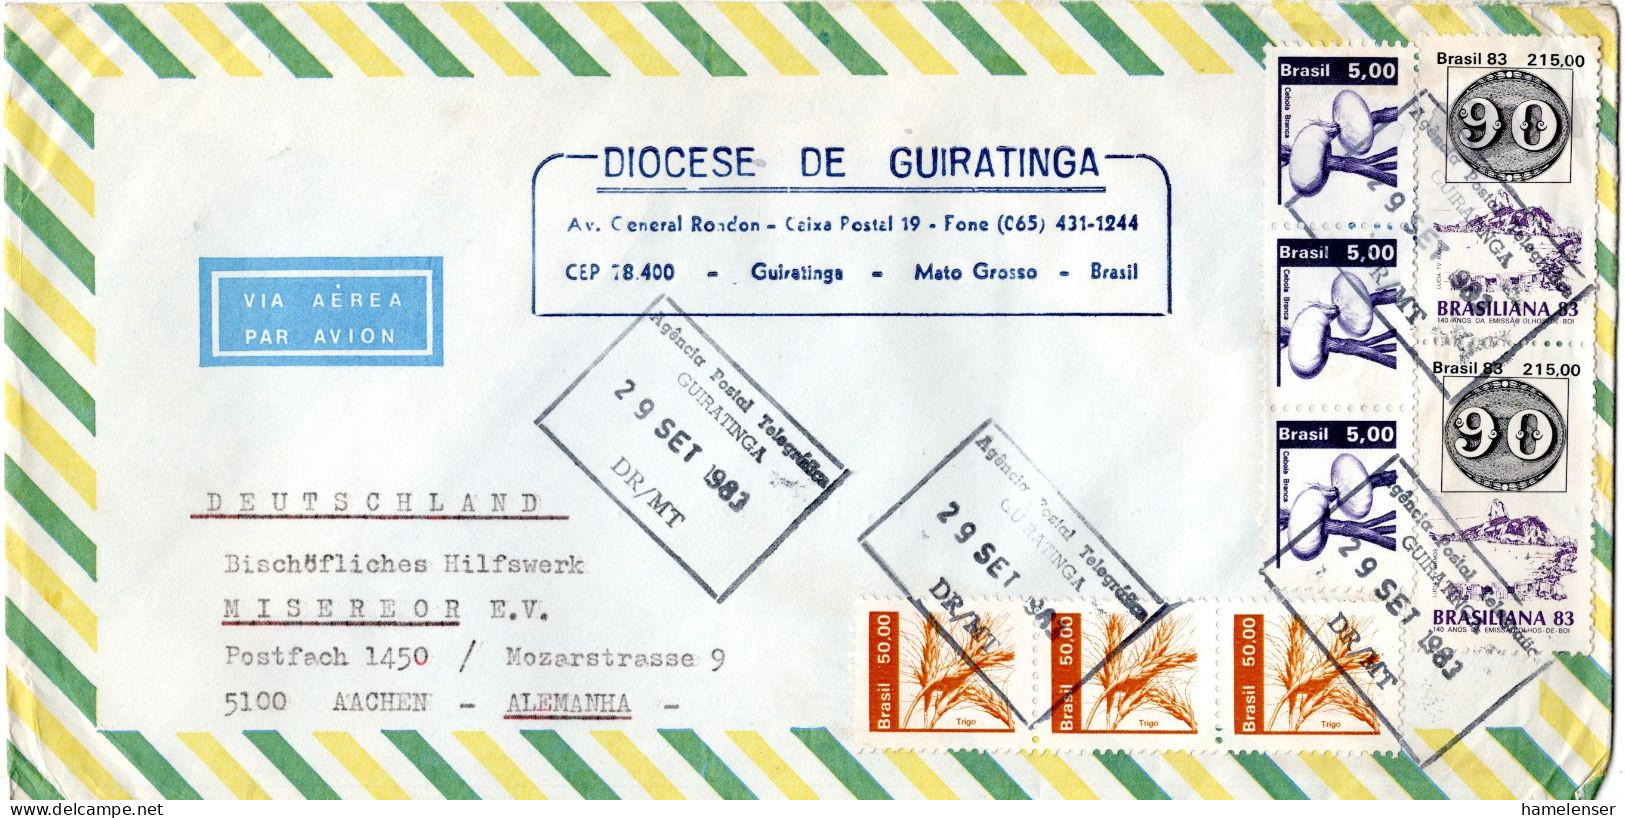 L75020 - Brasilien - 1983 - 2@Cr215,00 Brasiliana '83 MiF A LpBf GUIRATINGA -> Westdeutschland - Briefe U. Dokumente